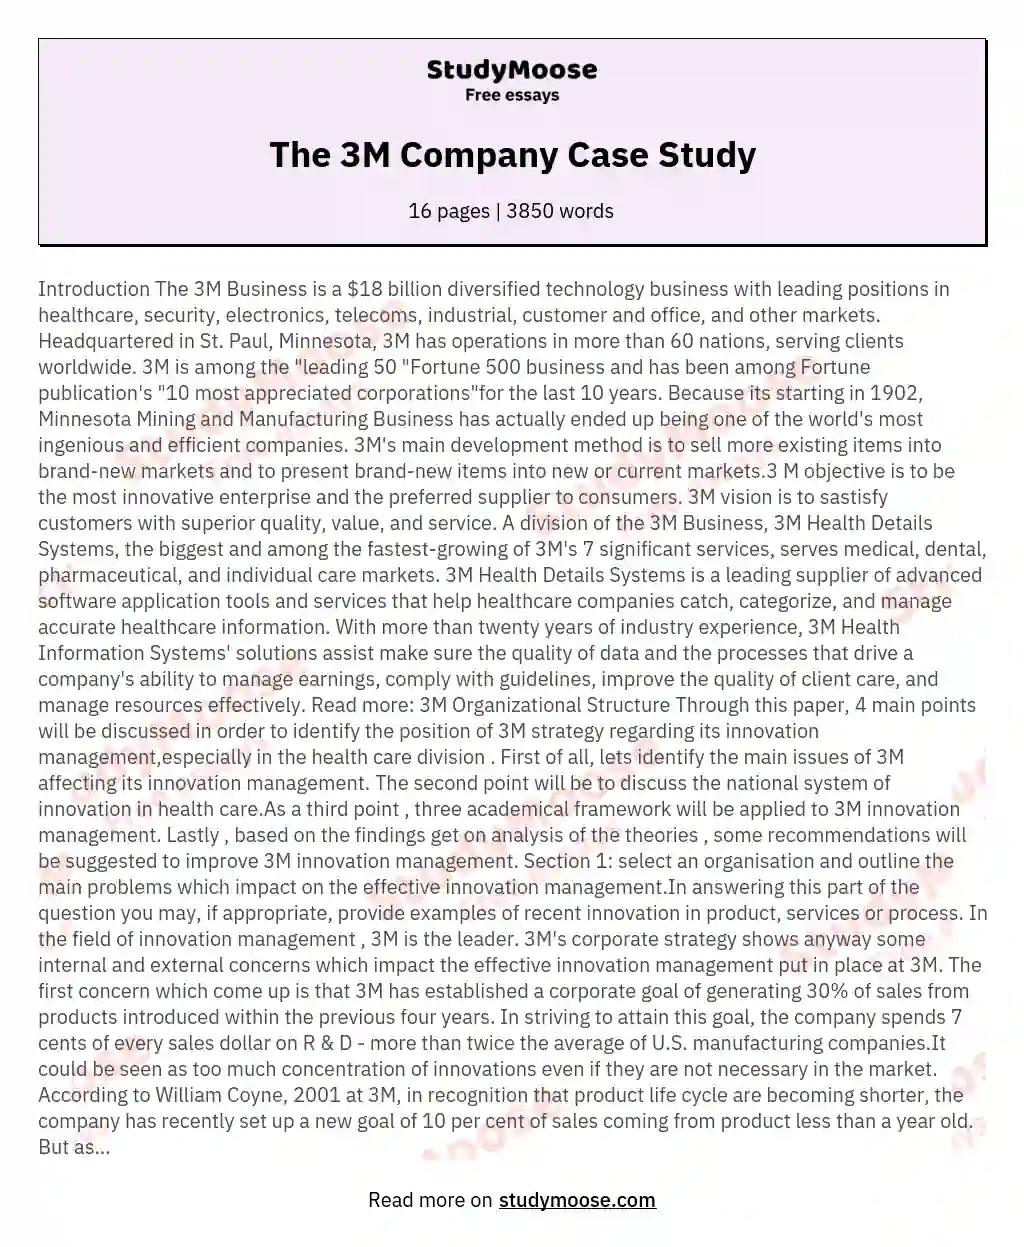 The 3M Company Case Study essay